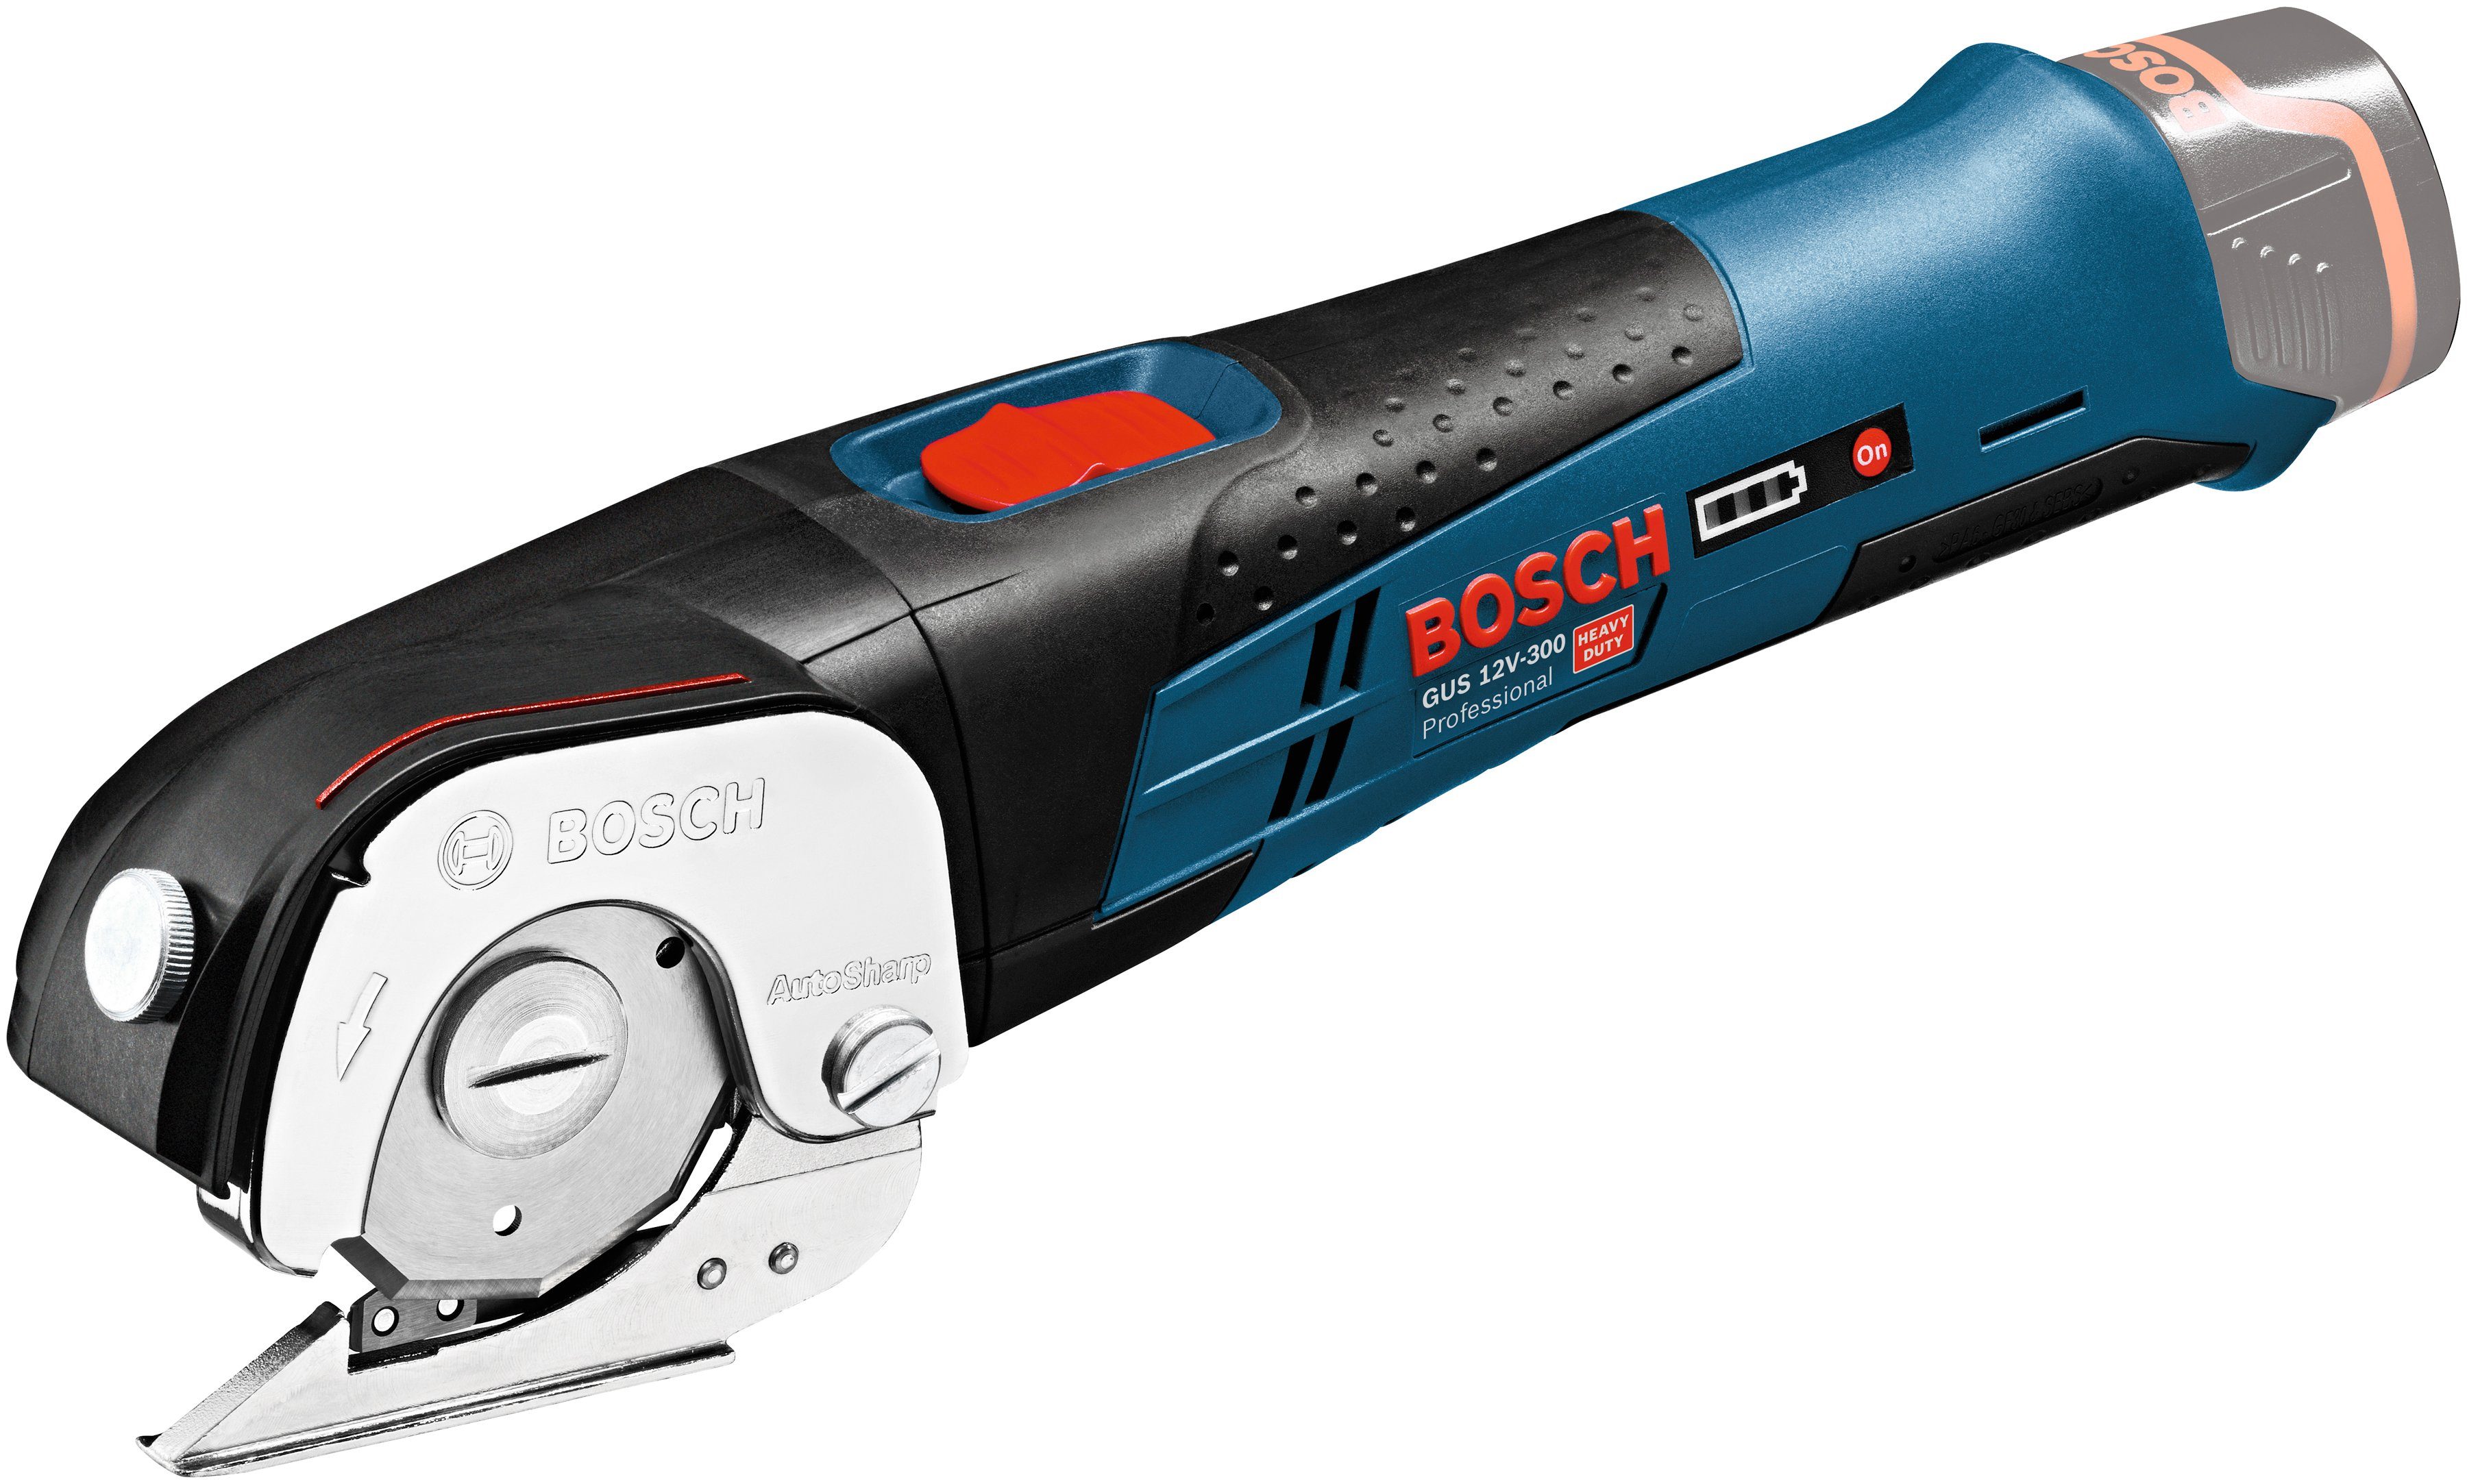 Bosch Professional Akku-Universalschere GUS 12V-300, ohne Akku und Ladegerät | Akkuscheren